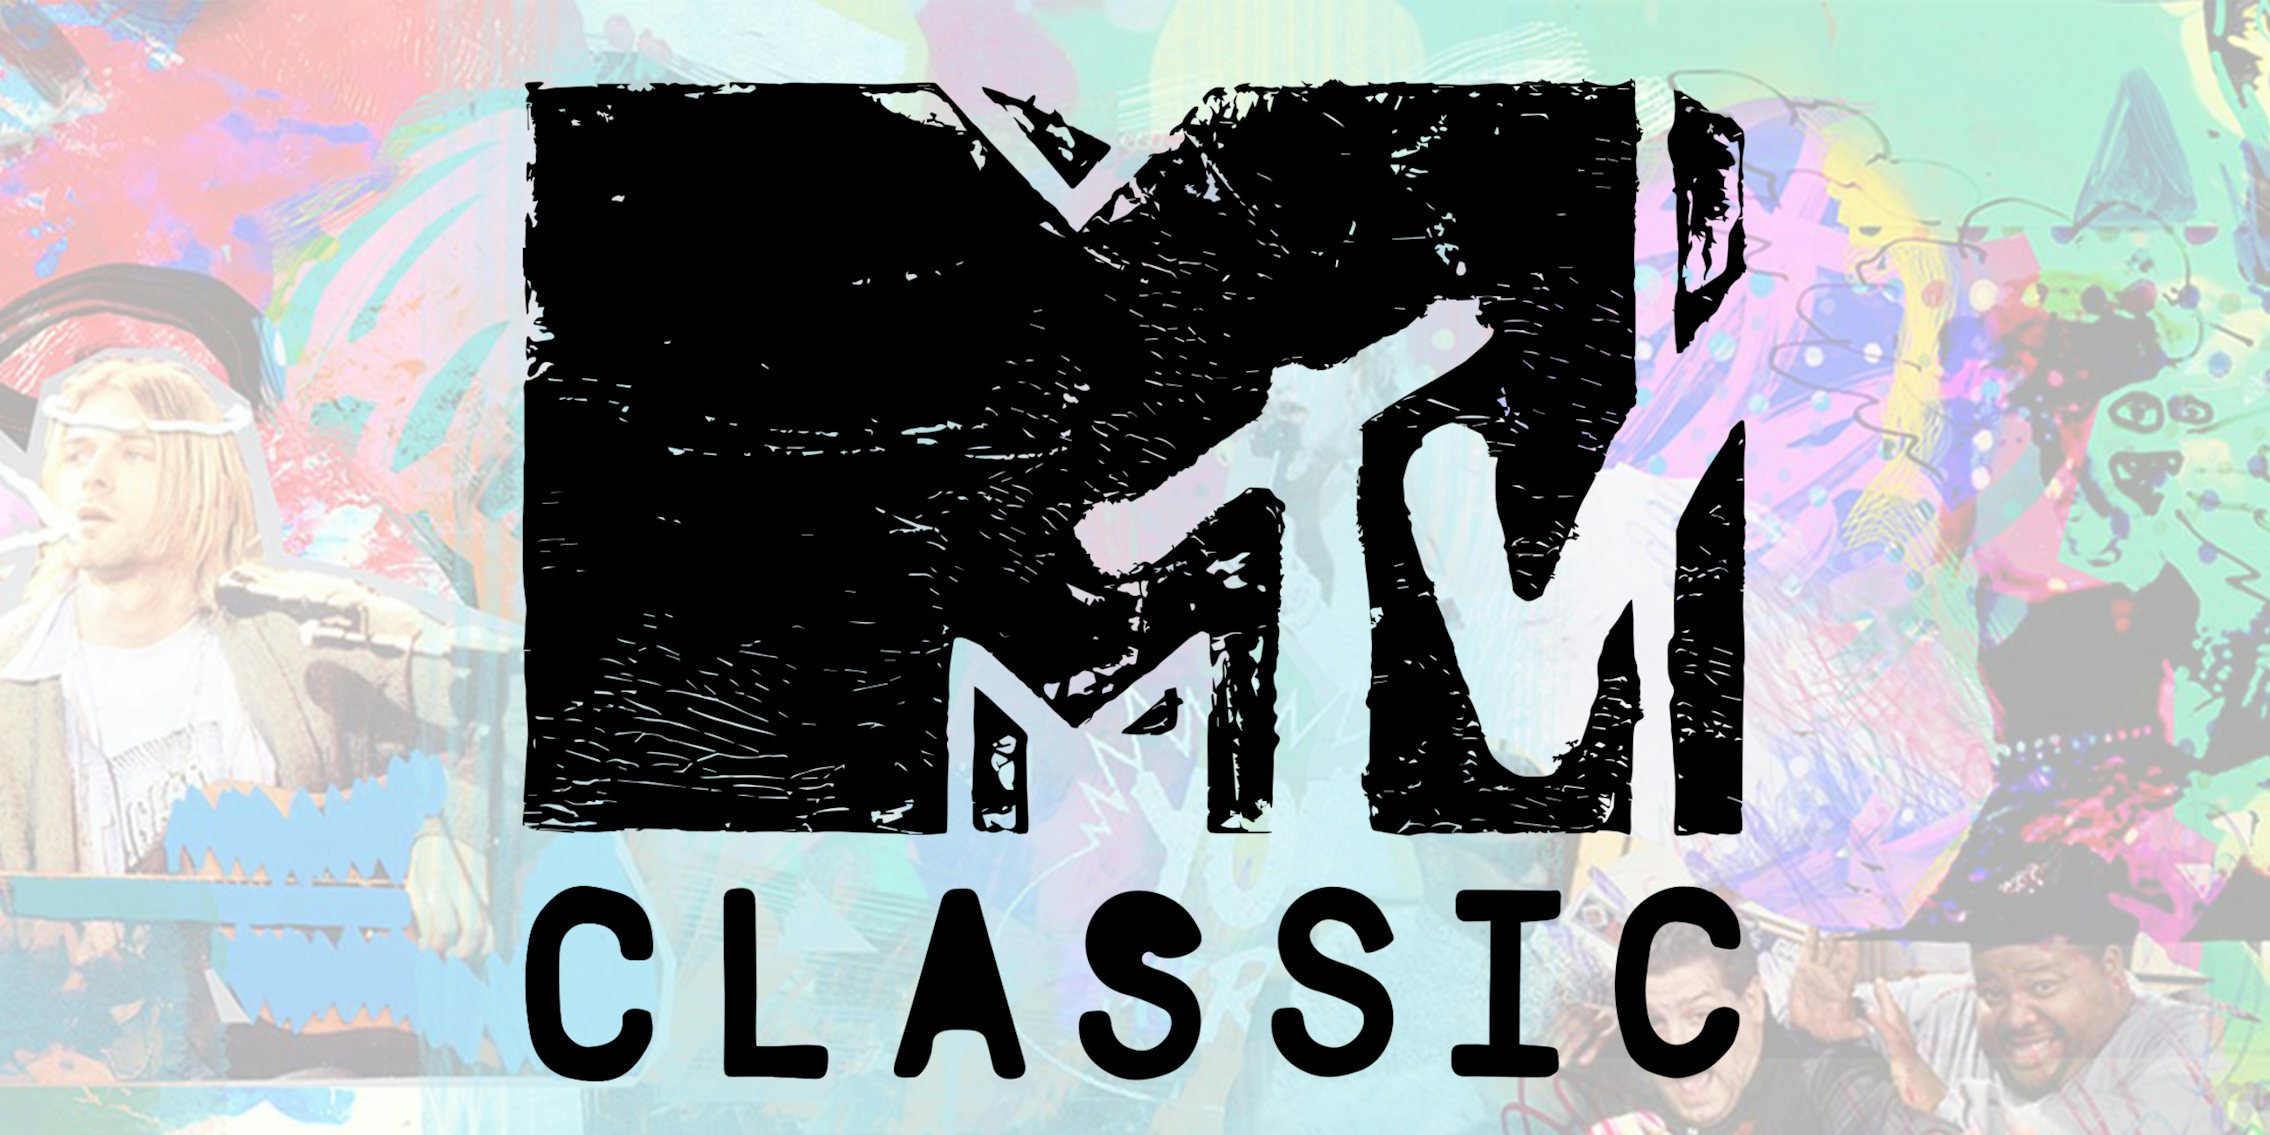 MTV classic live stream